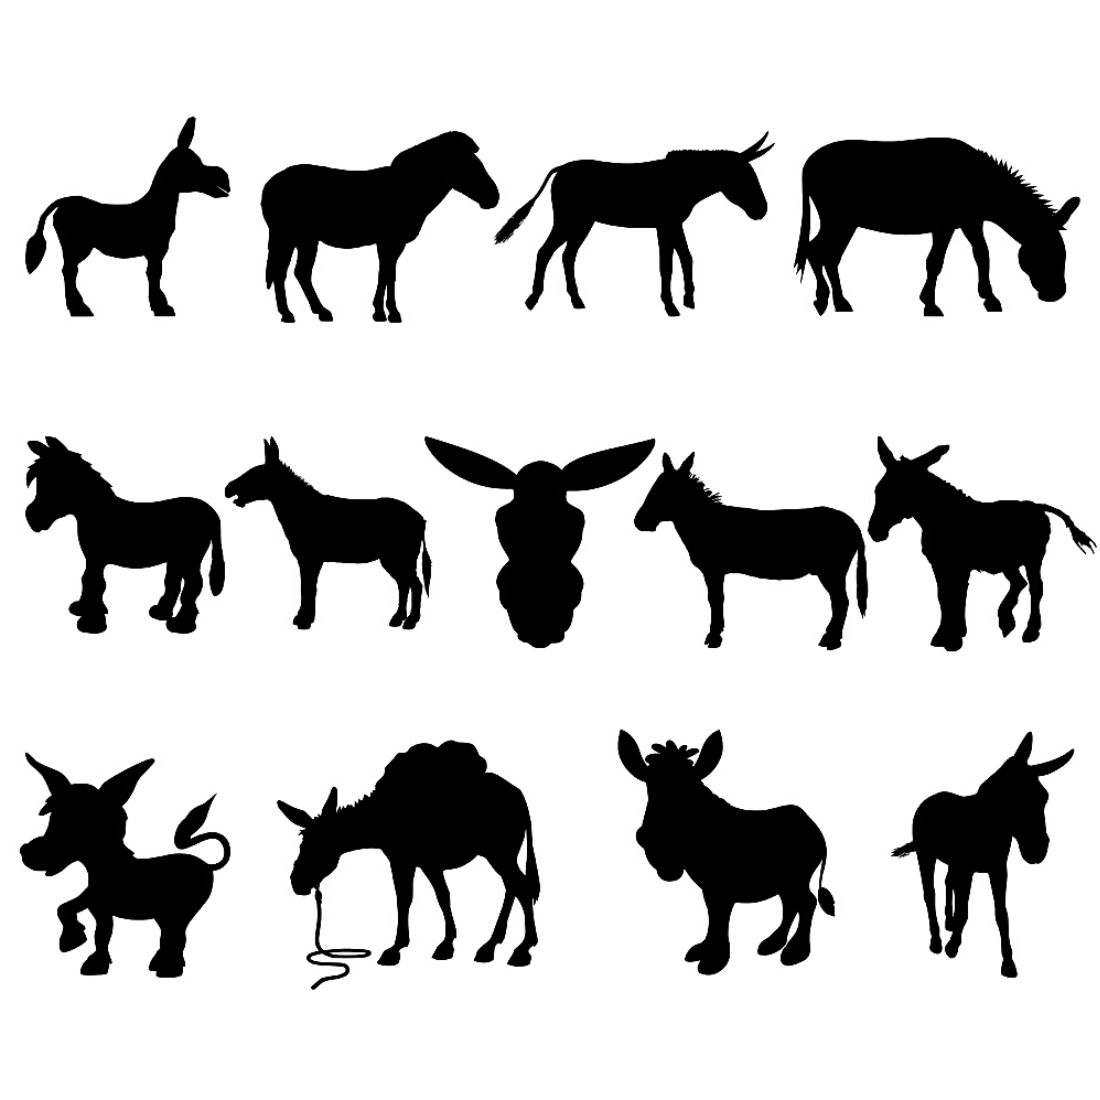 Donkey Silhouette Illustrations Bundle cover image.